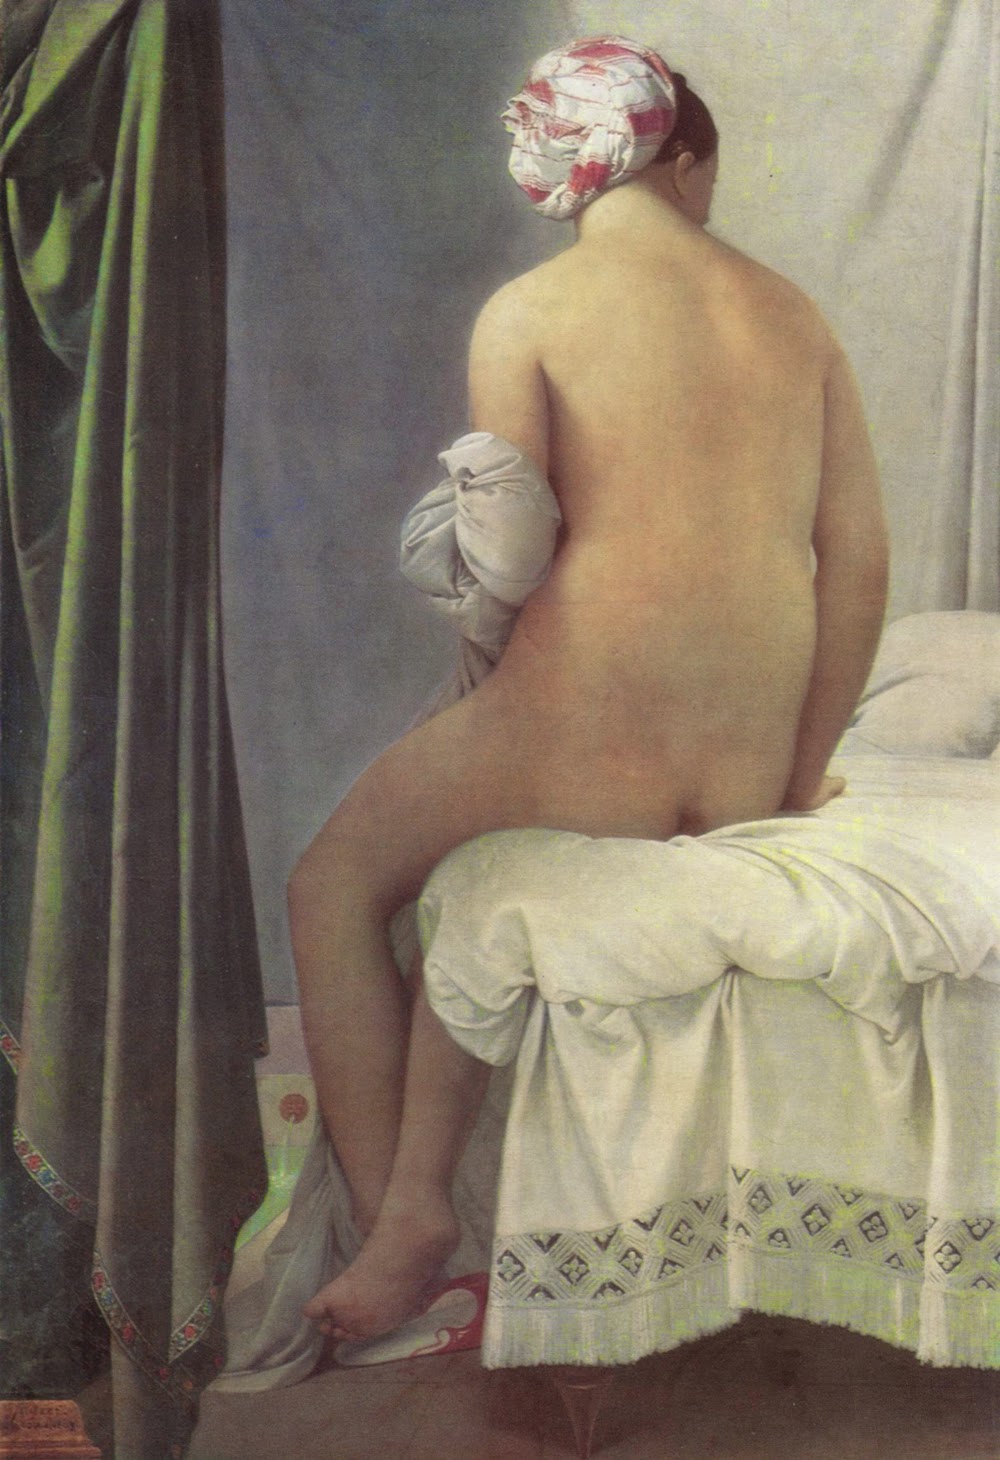 Jean+Auguste+Dominique+Ingres-1780-1867 (202).jpg